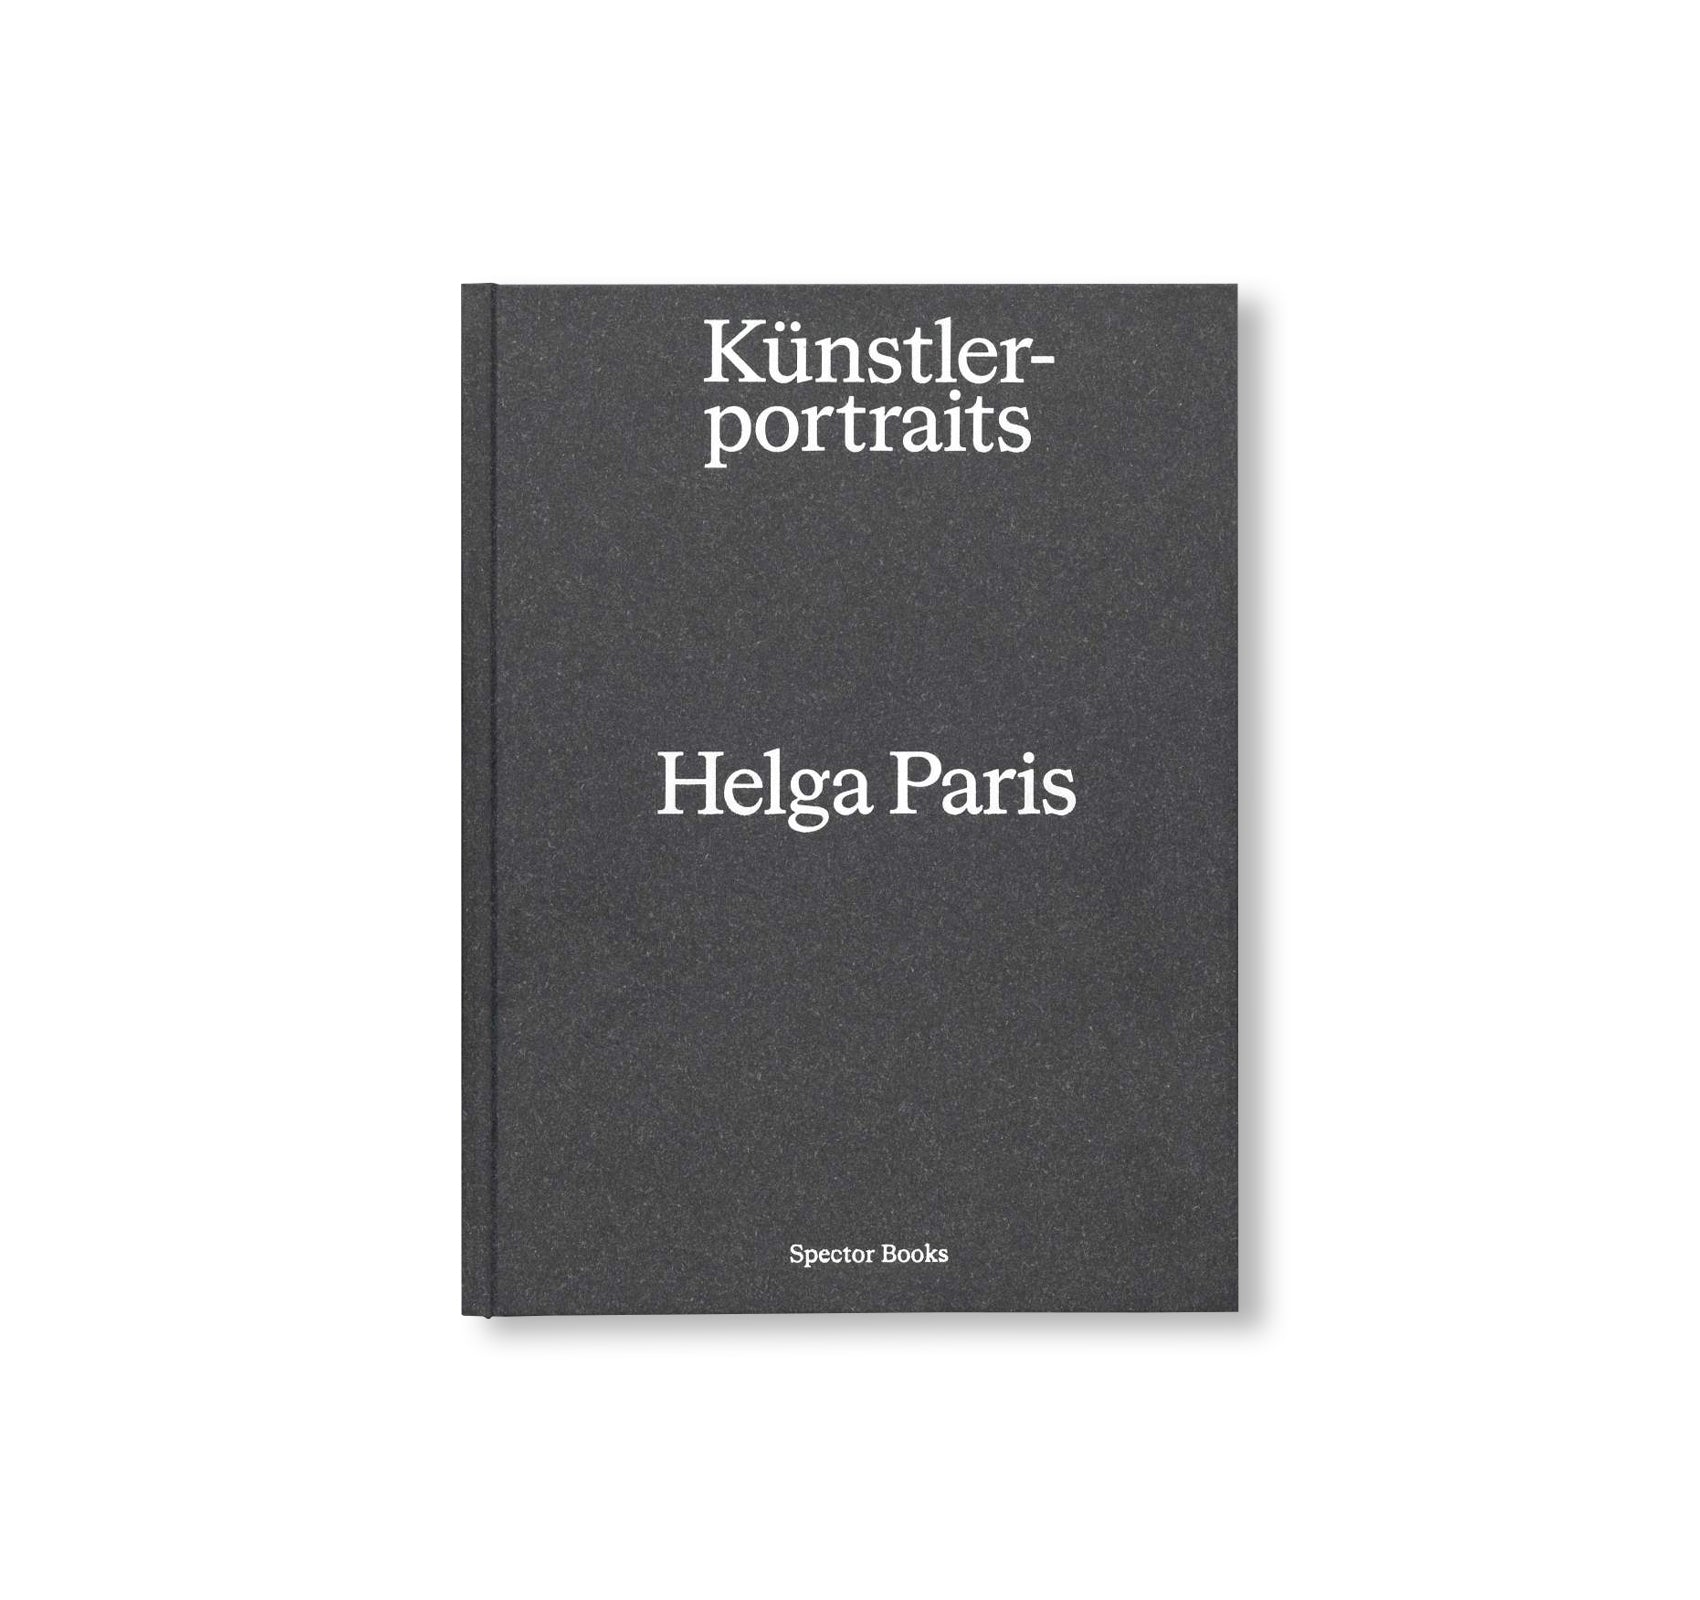 KÜNSTLERPORTRAITS by Helga Paris